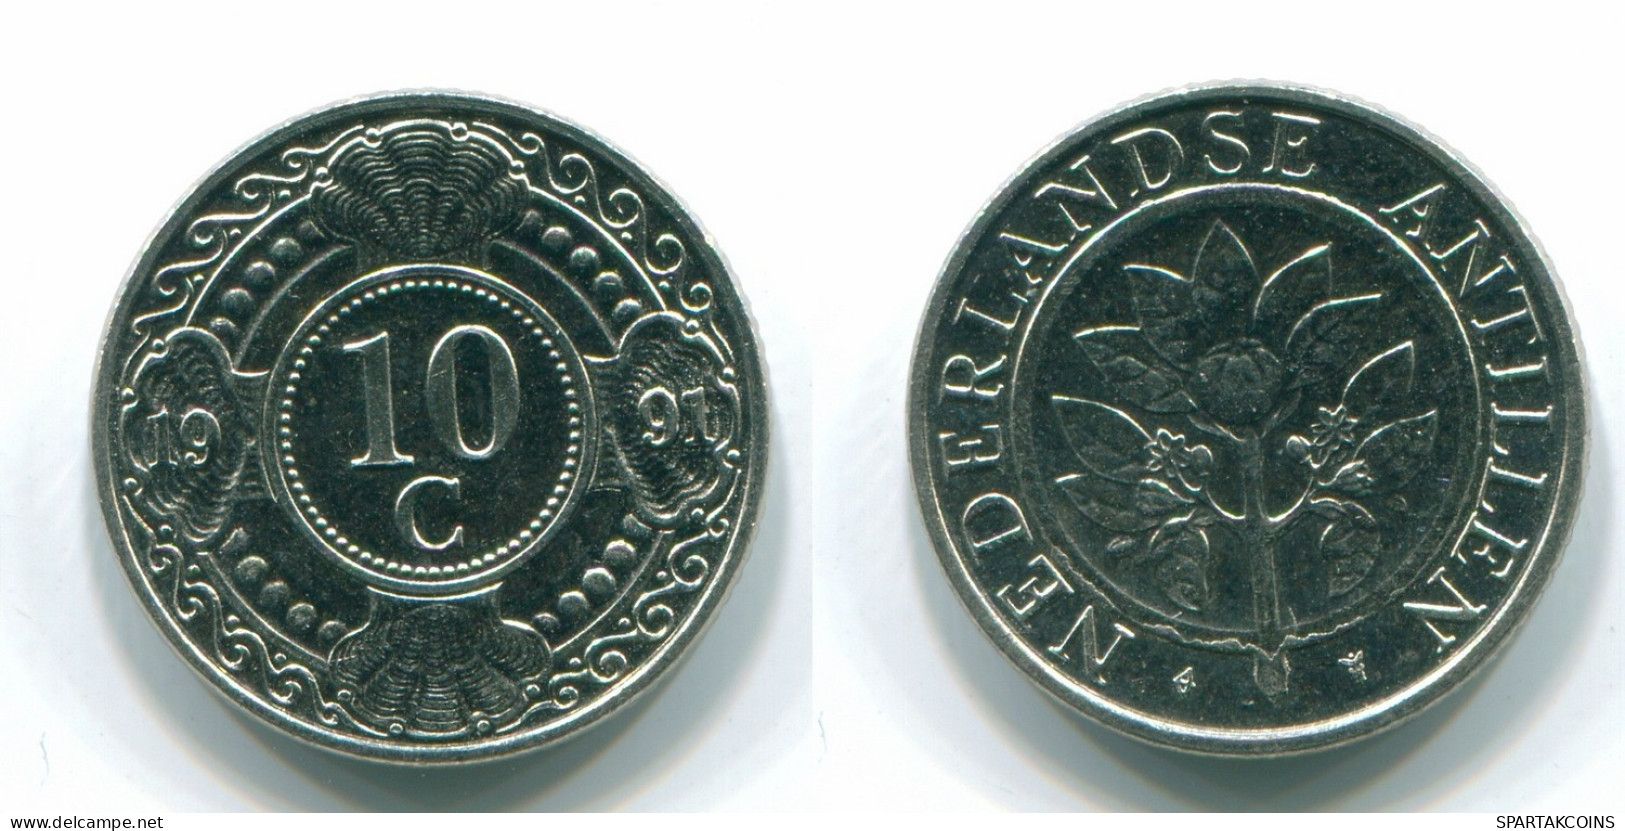 10 CENTS 1991 NETHERLANDS ANTILLES Nickel Colonial Coin #S11344.U.A - Nederlandse Antillen